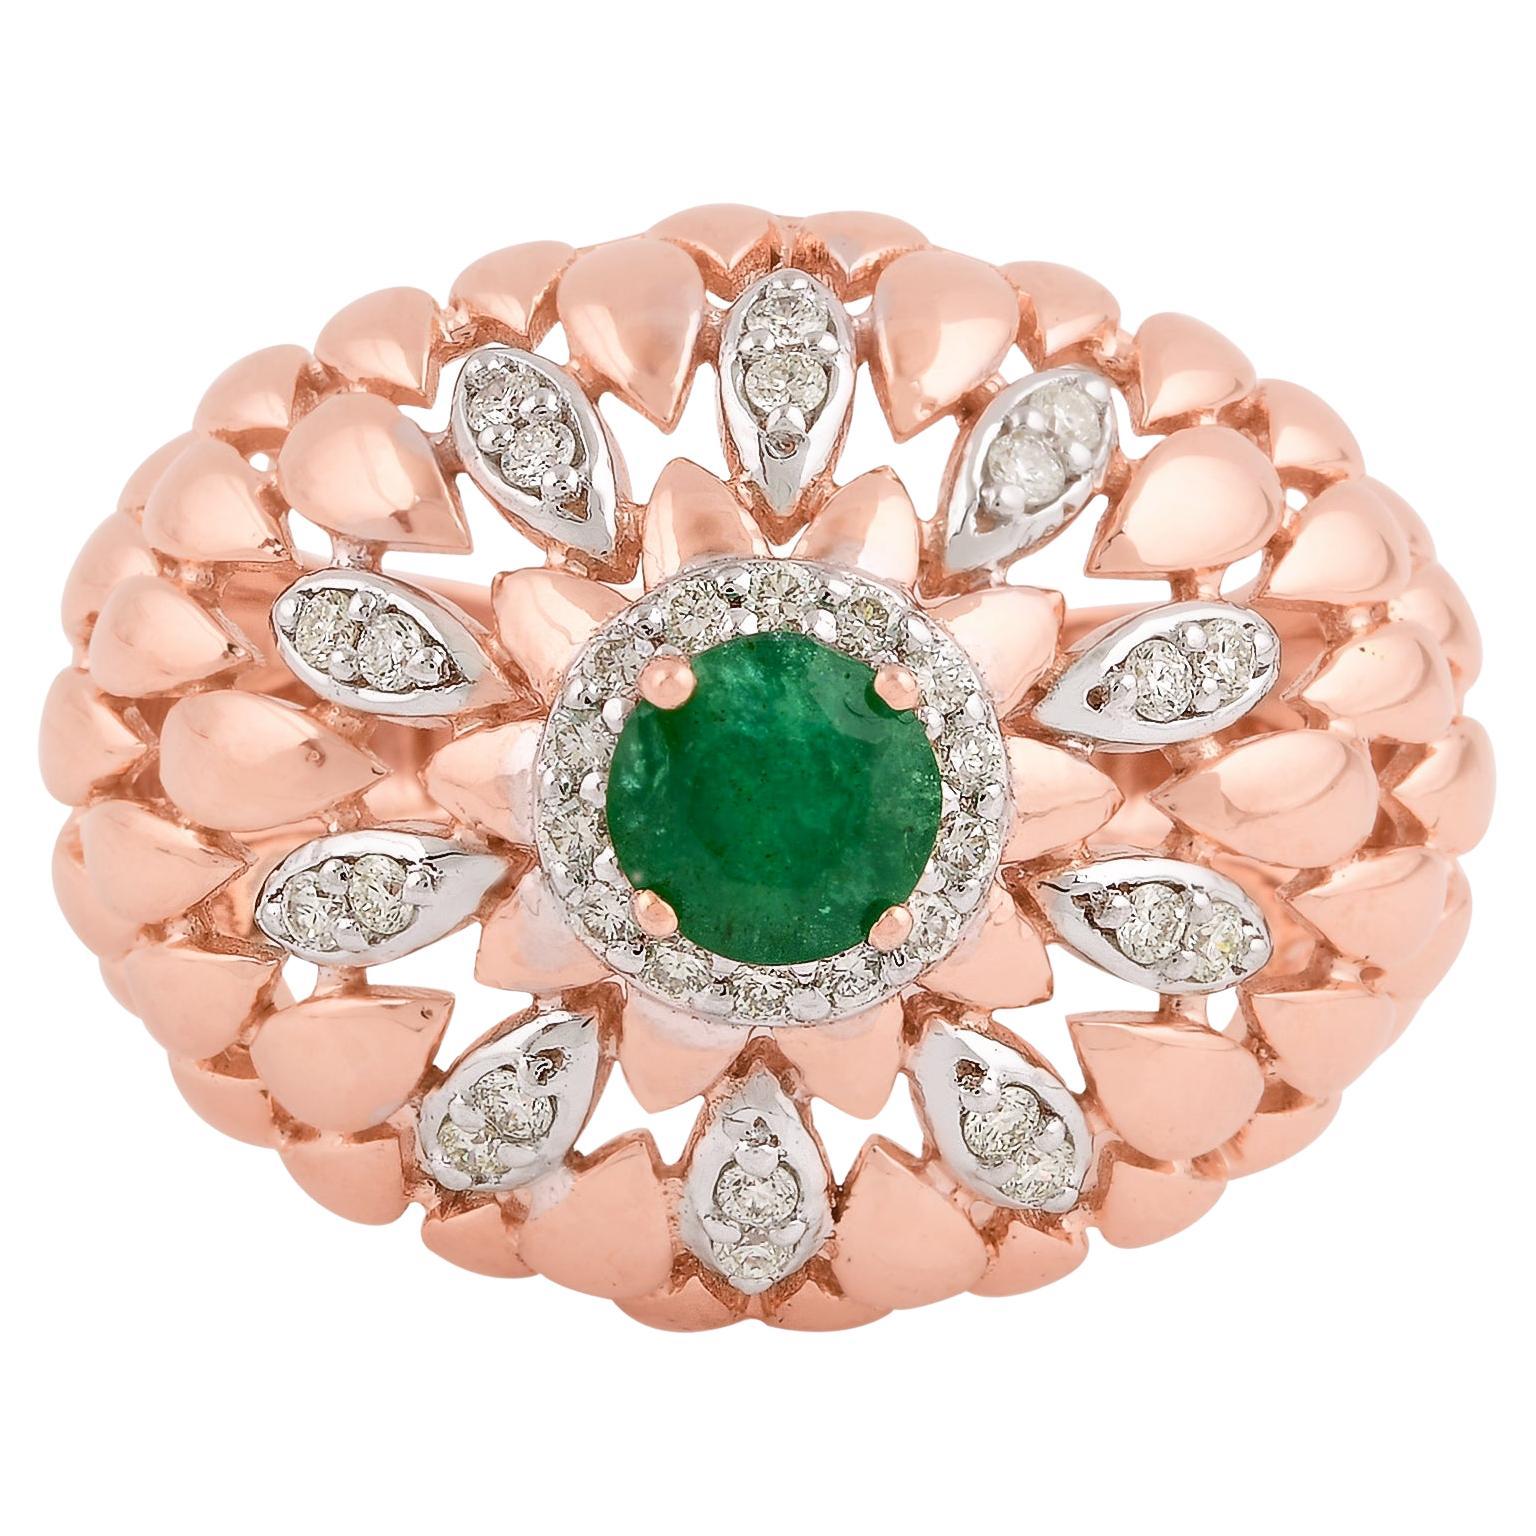 Zambian Emerald Gemstone Dome Ring Diamond Pave Solid 14k Rose Gold Fine Jewelry (bague en forme de dôme en émeraude zambienne, pavé de diamants, or rose massif)